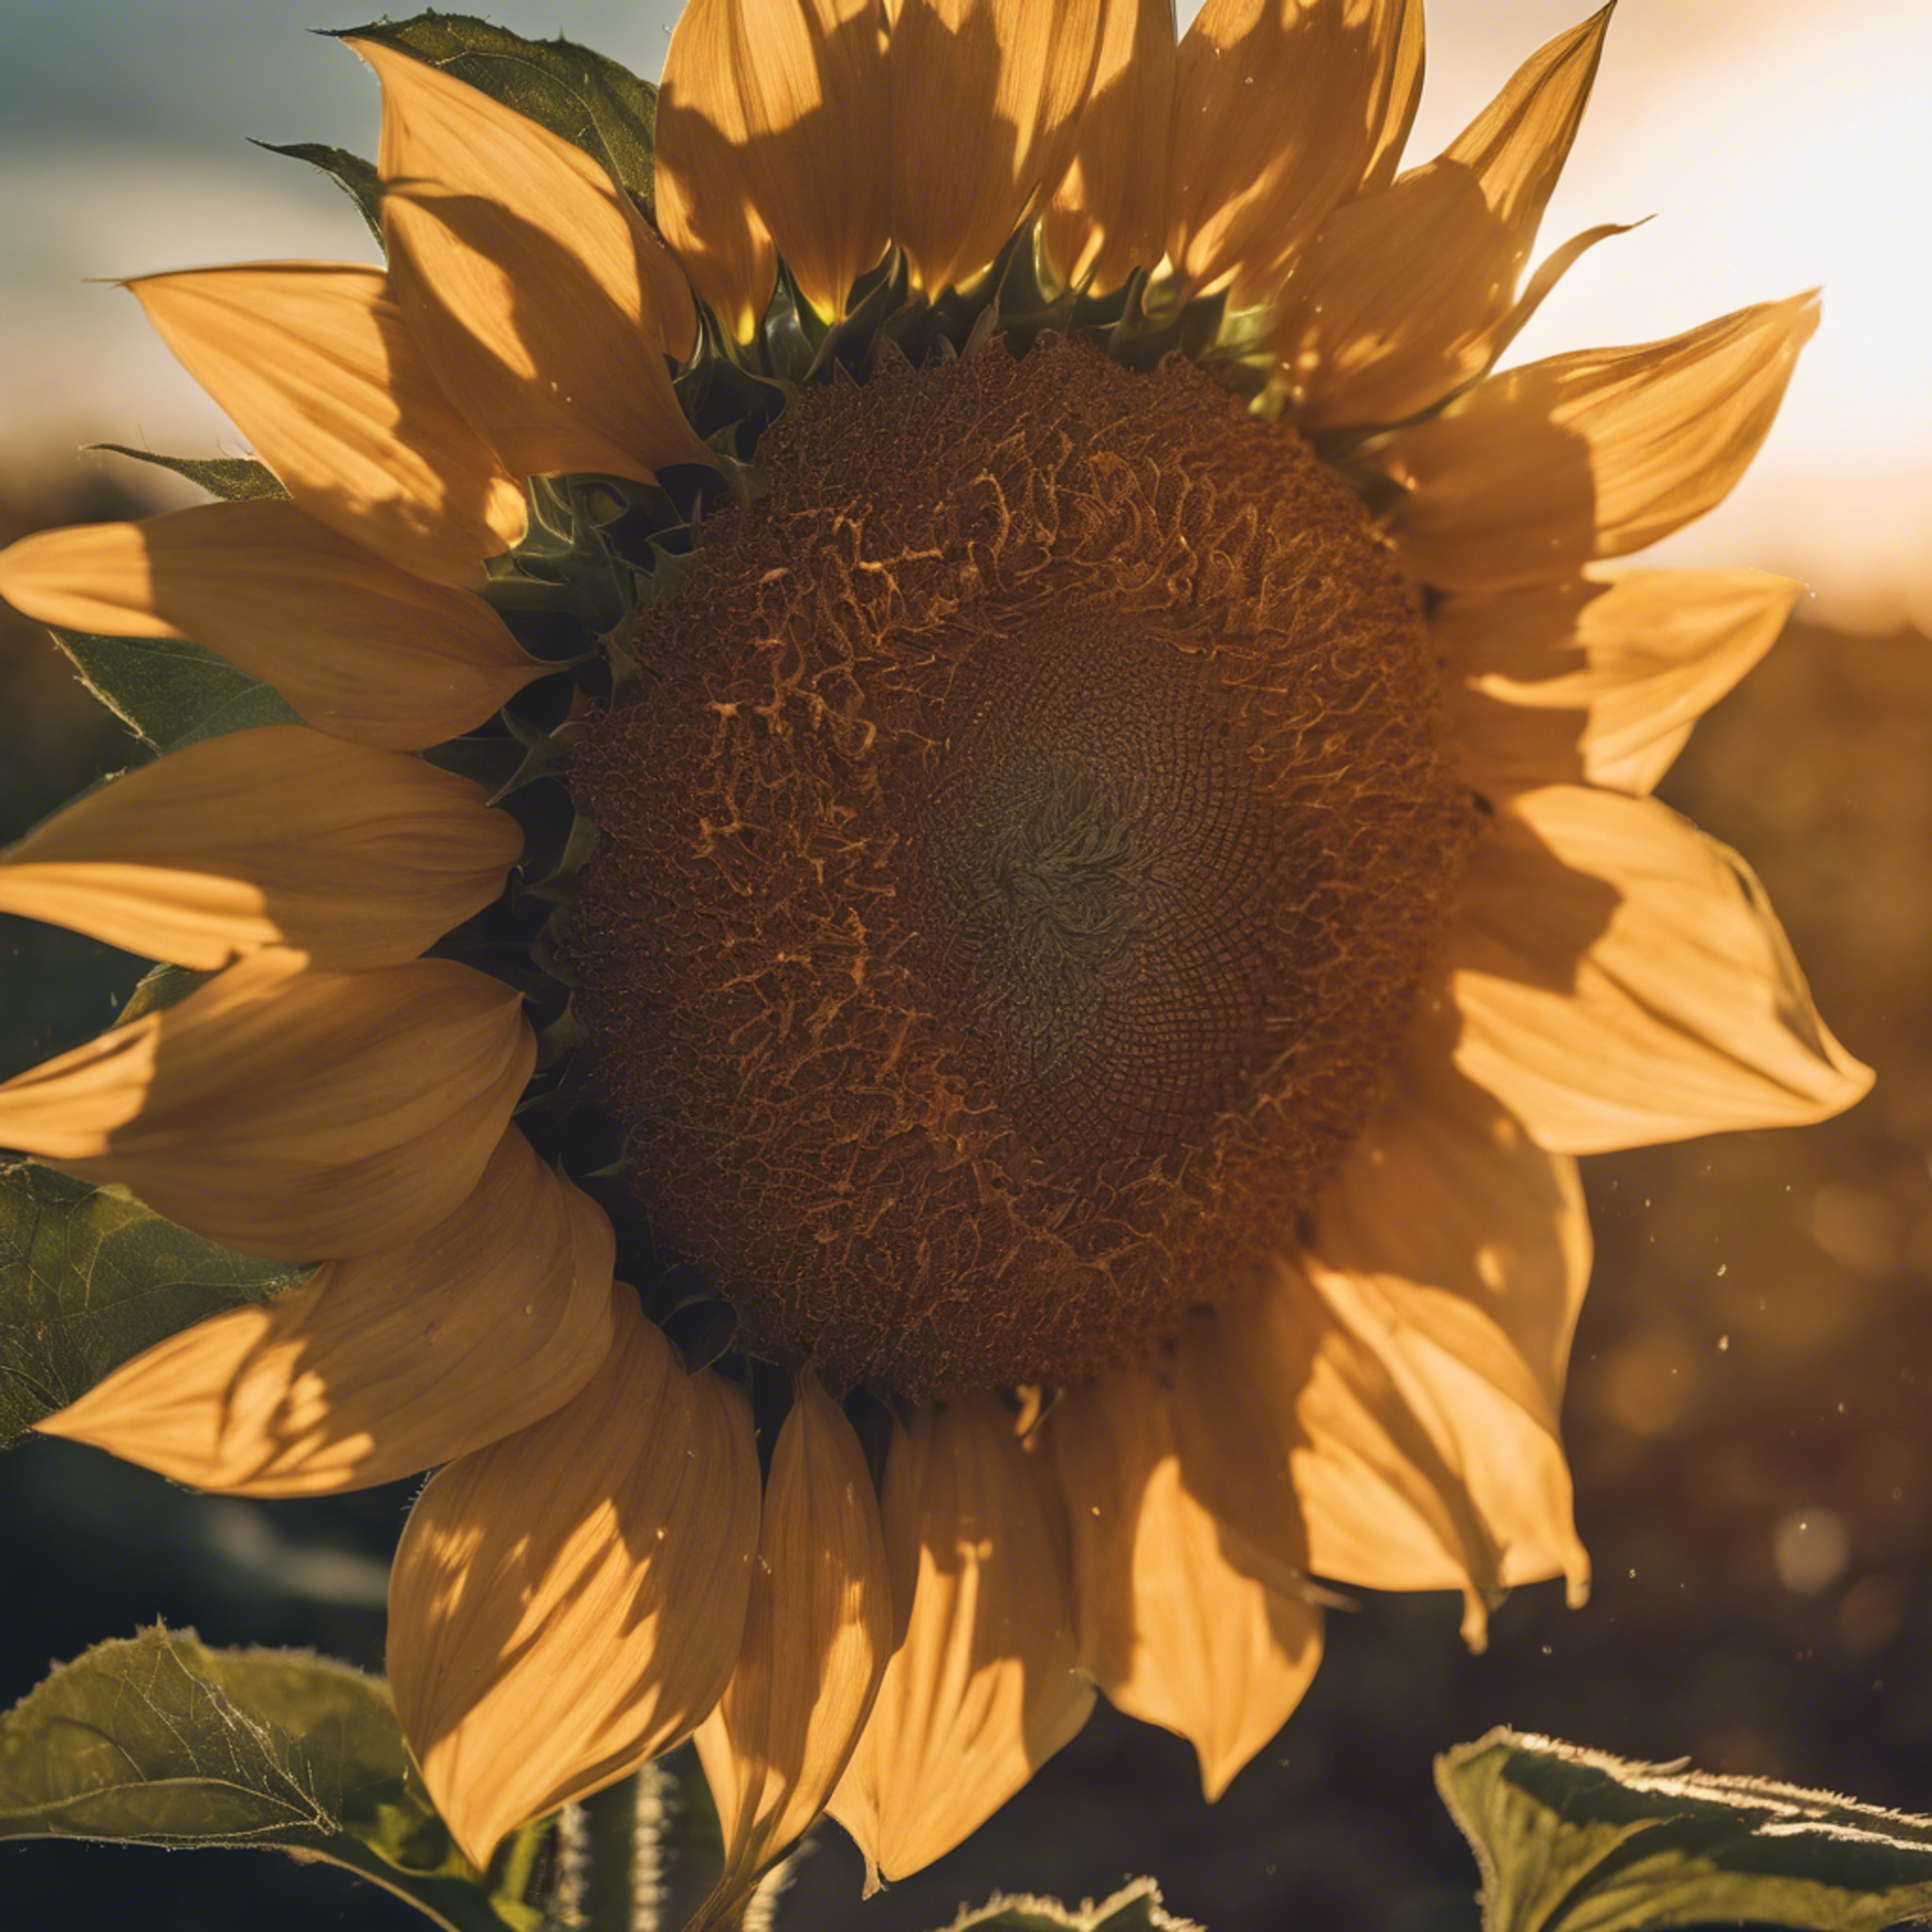 A sunflower facing the sun during a sunset. Tapeta[9b42fe1f279f4e8bae2c]